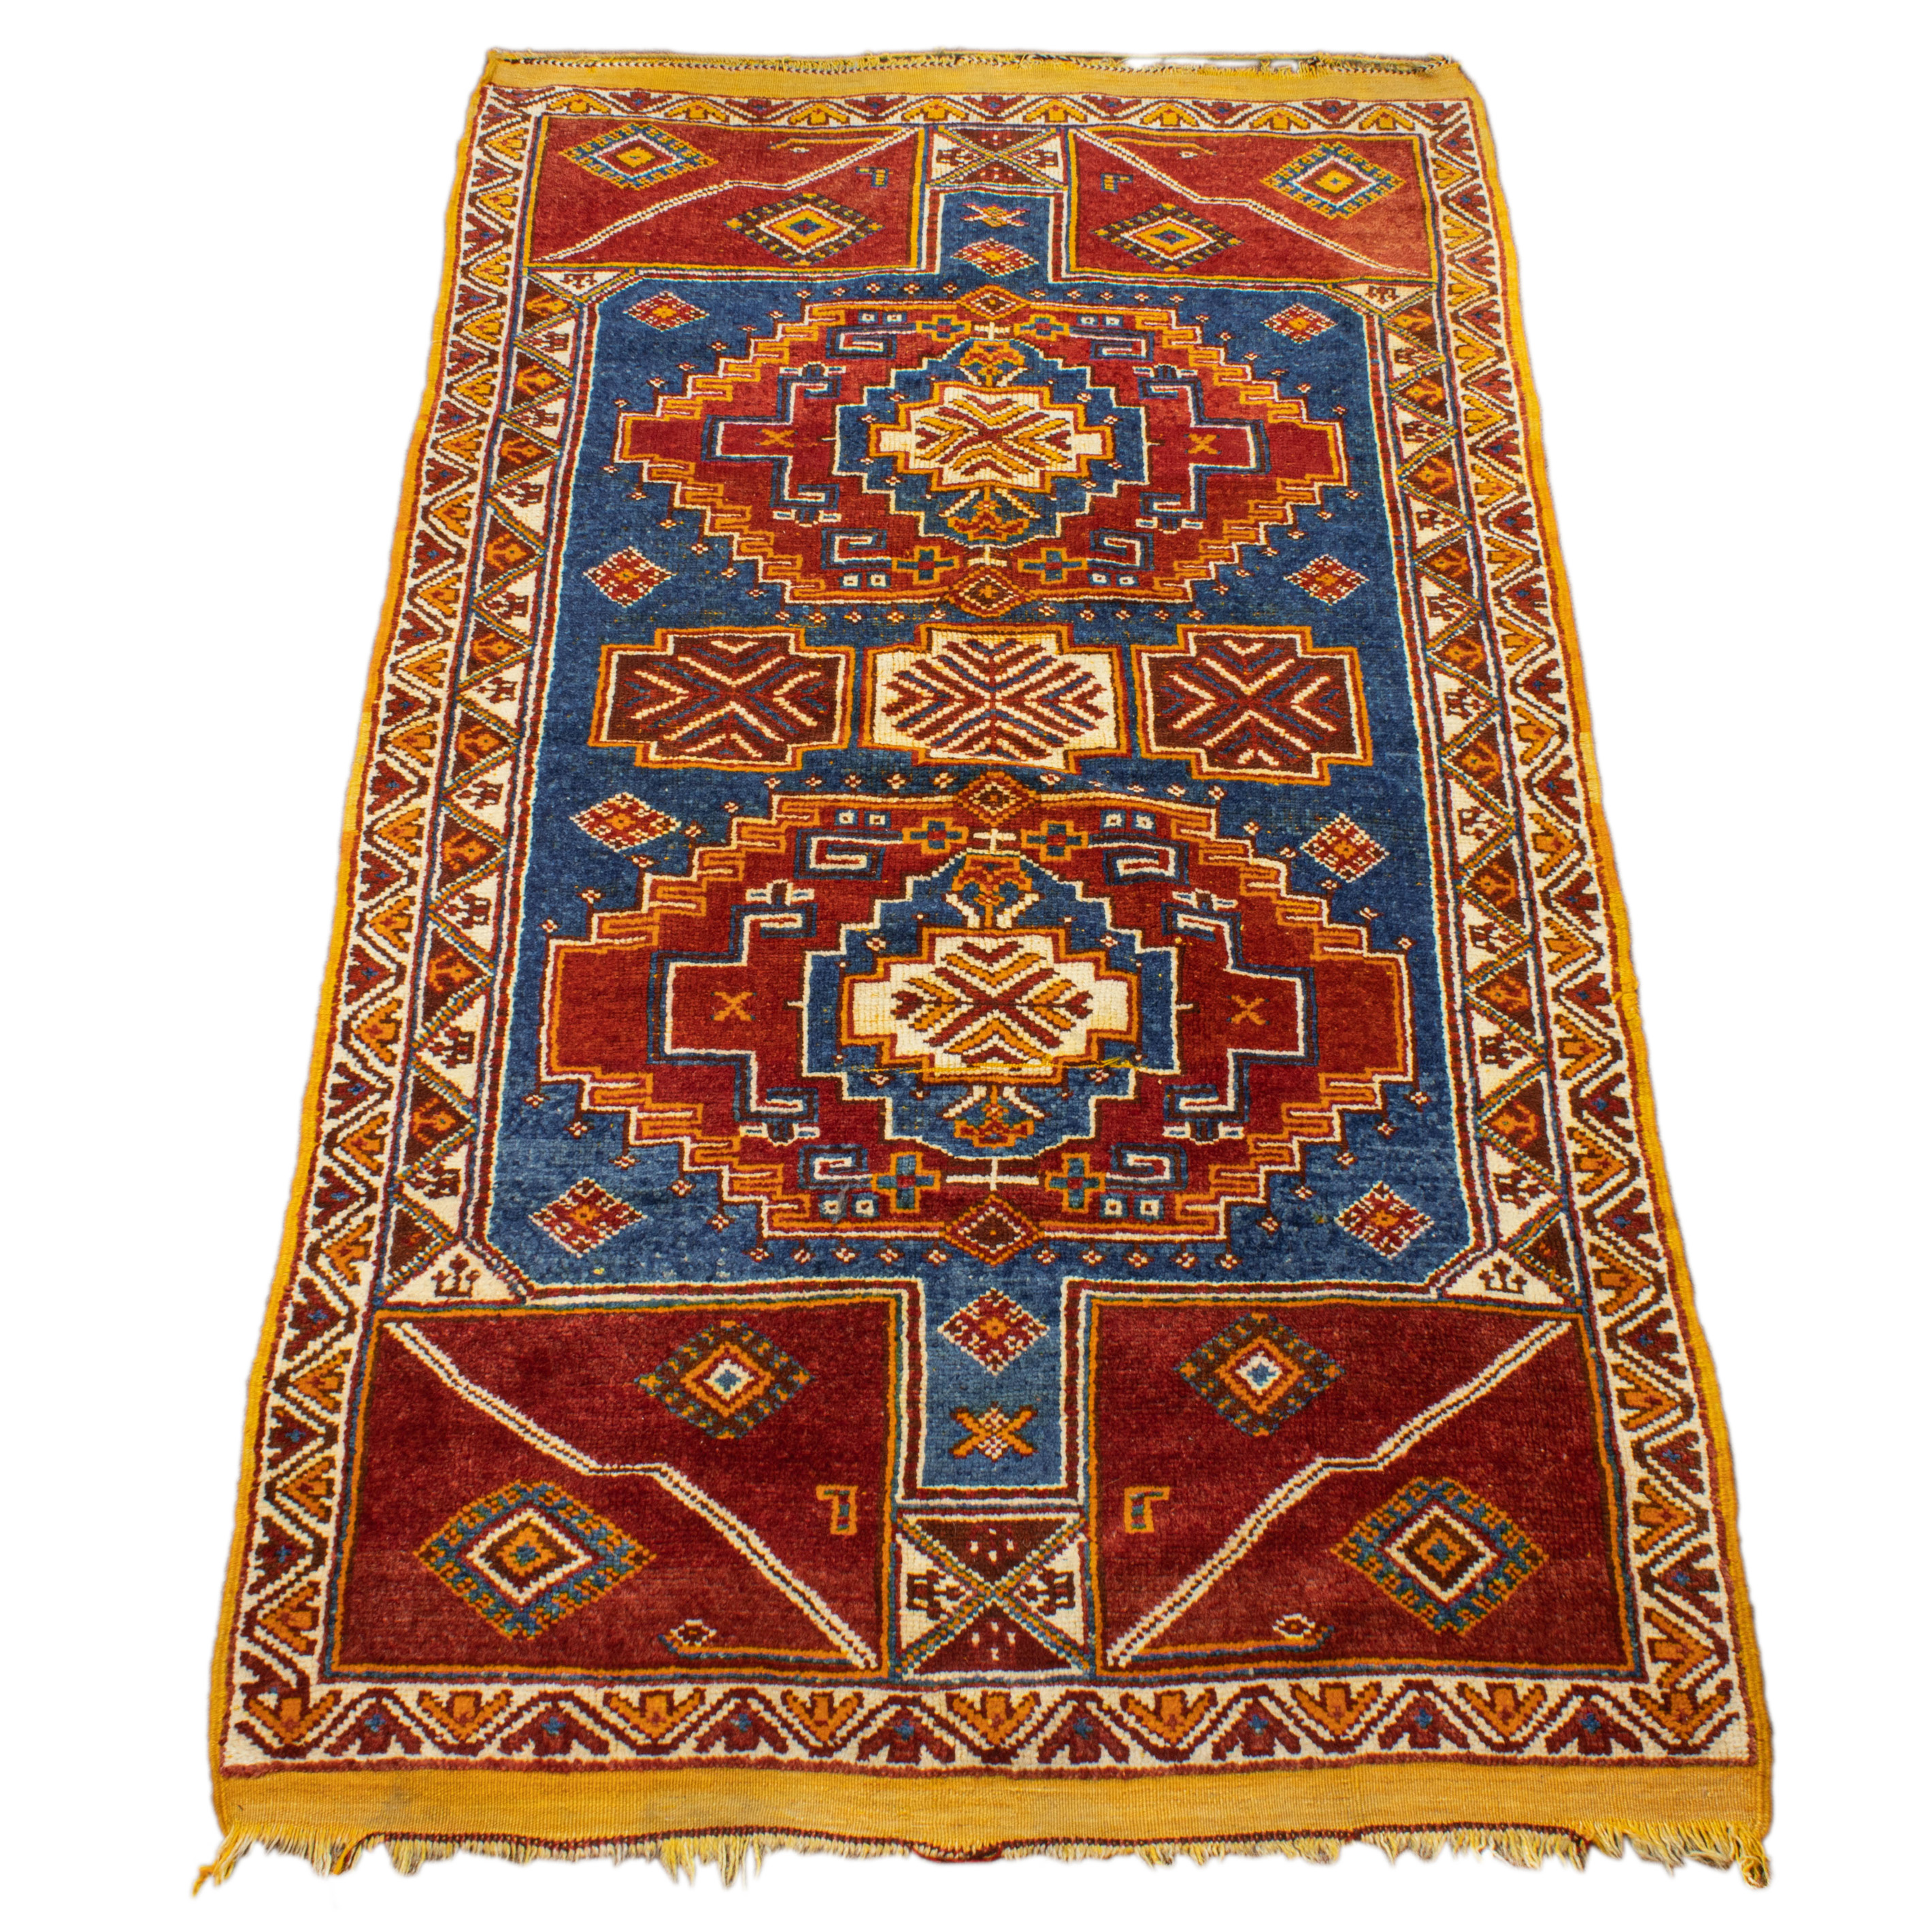 MOROCCAN CARPET Moroccan carpet  2d1d15